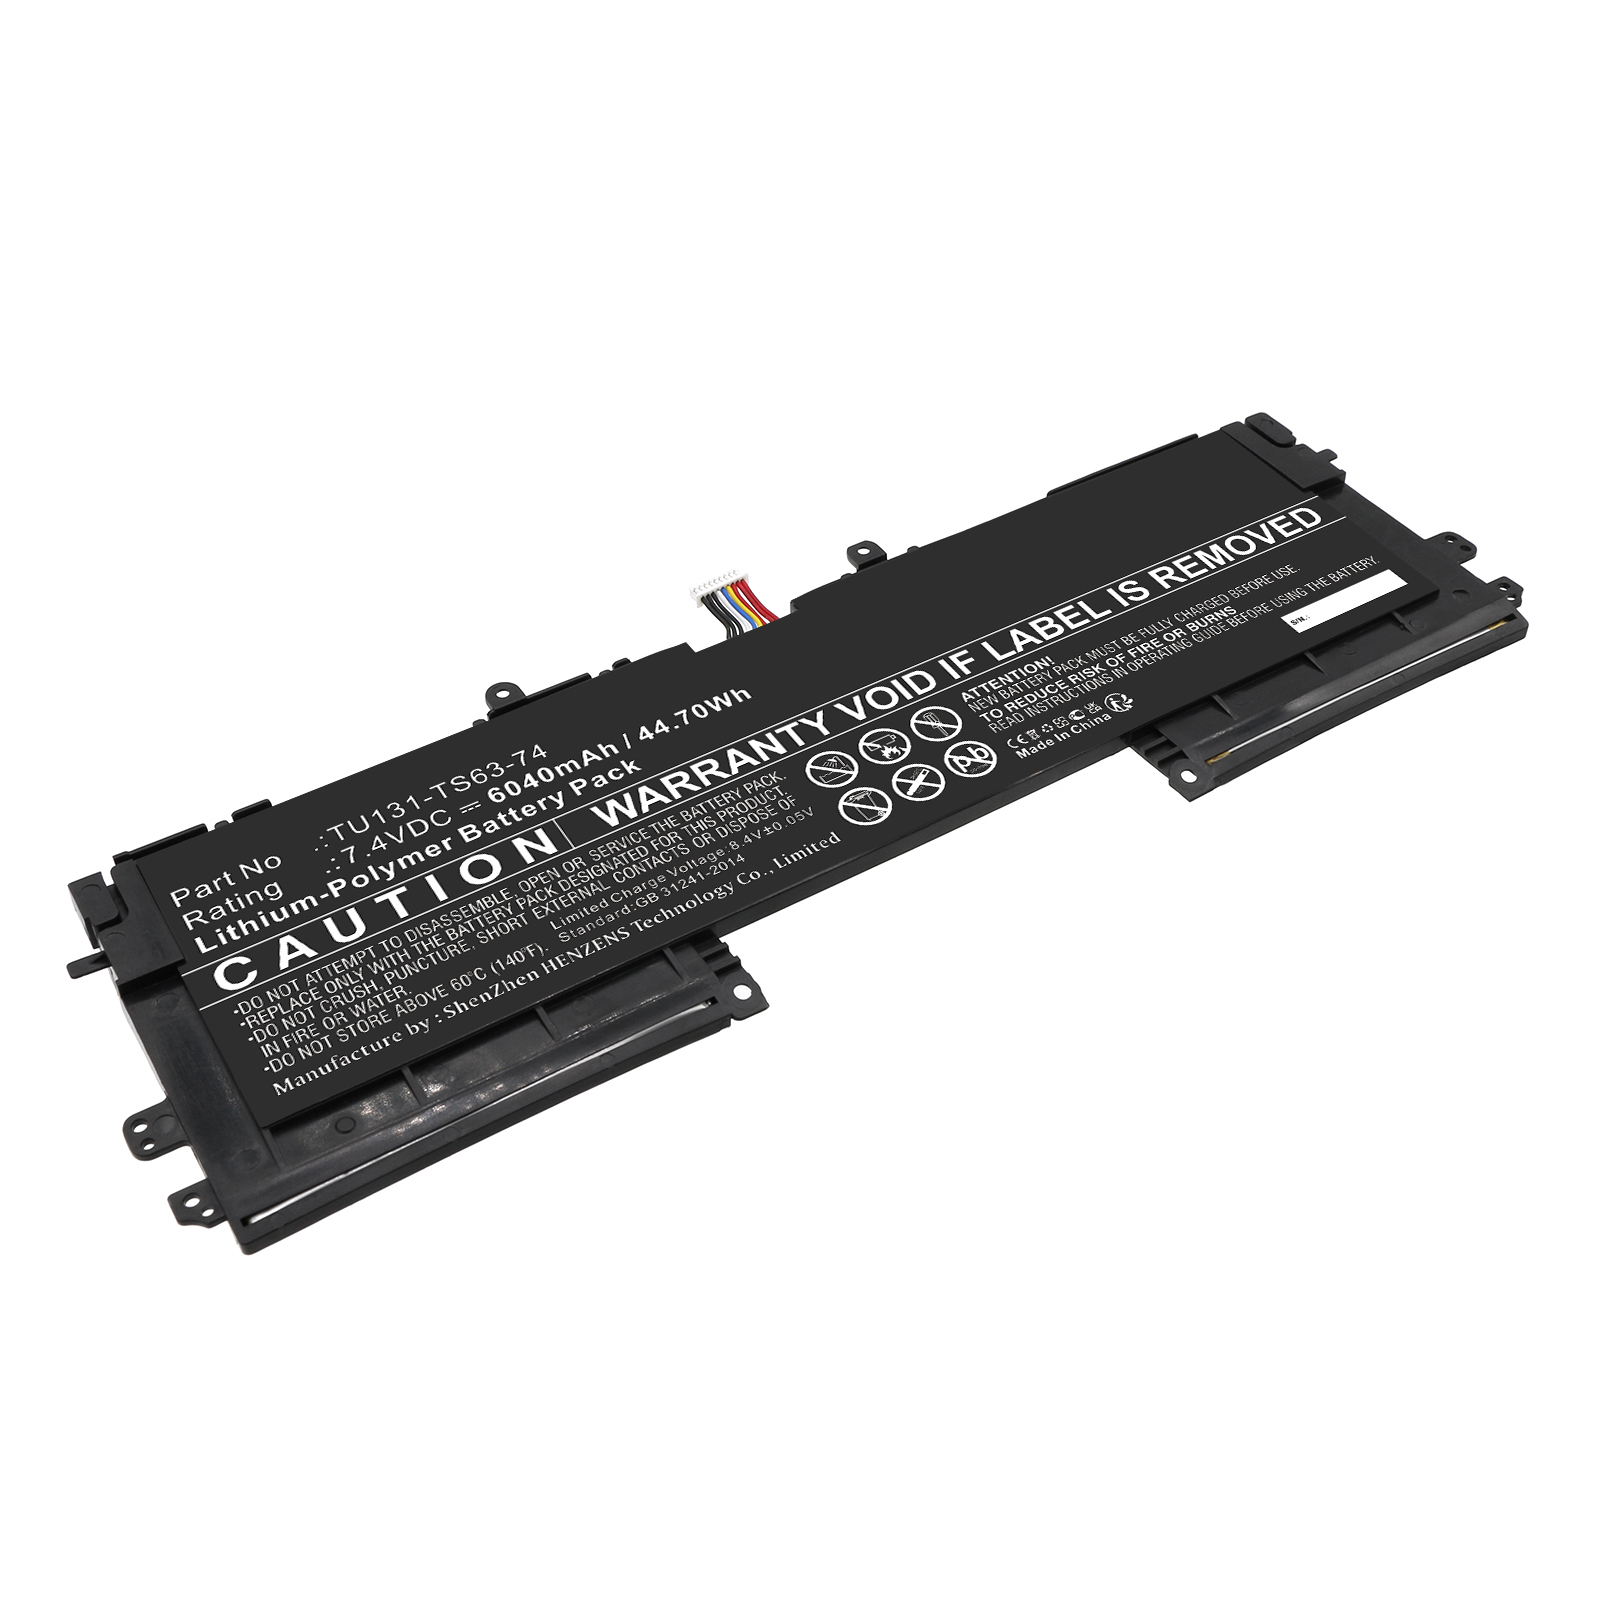 Synergy Digital Laptop Battery, Compatible with DELL TU131-TS63-74 Laptop Battery (Li-Pol, 7.4V, 6040mAh)